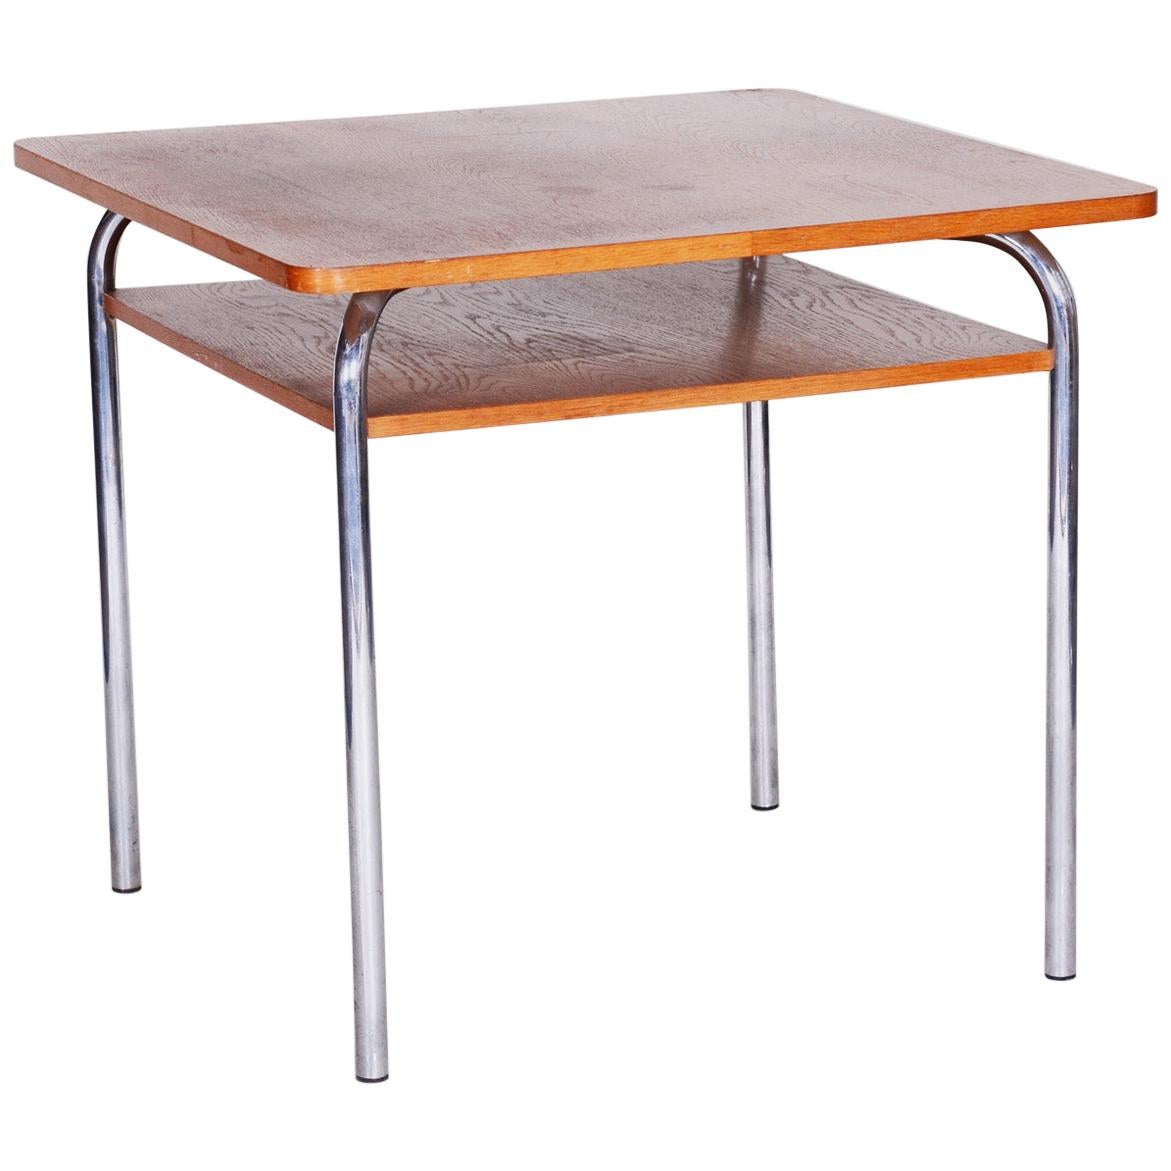 20th Century Restored Czech Oak Bauhaus Table by Vichr a Spol, Chrome, 1940s For Sale